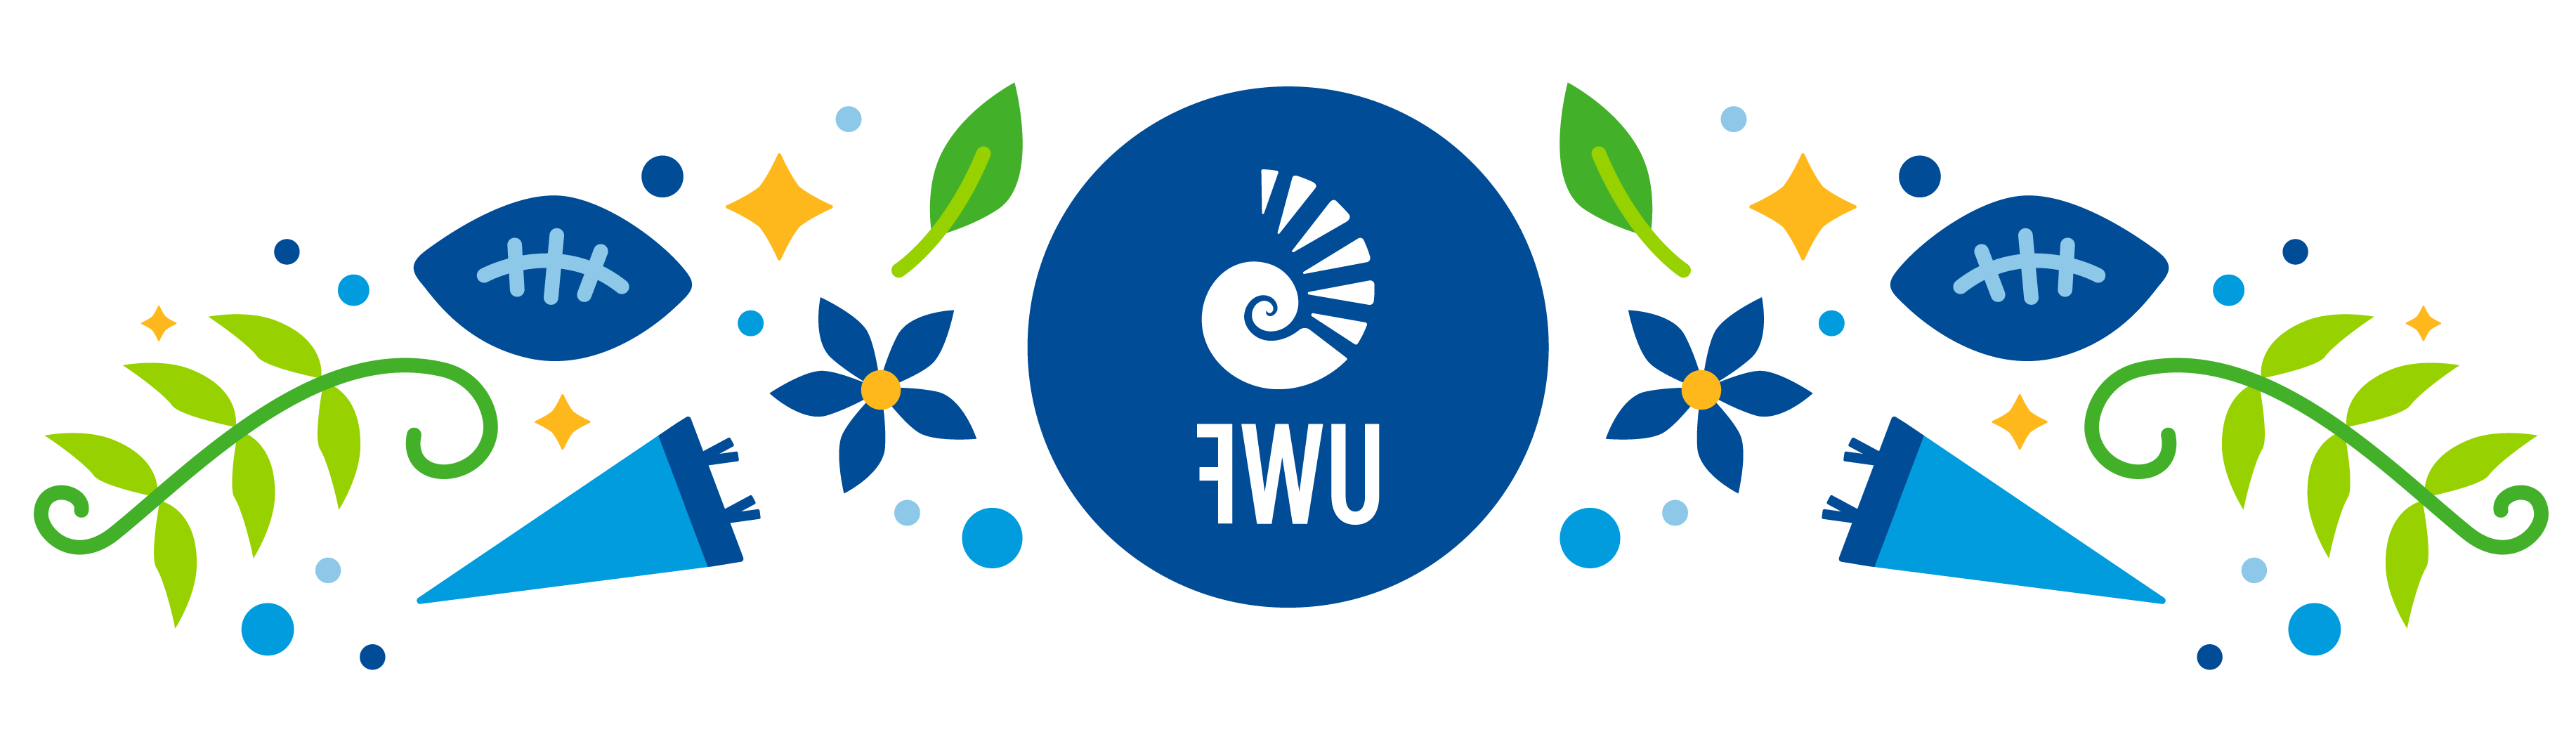 UWF字母标志周围装饰元素